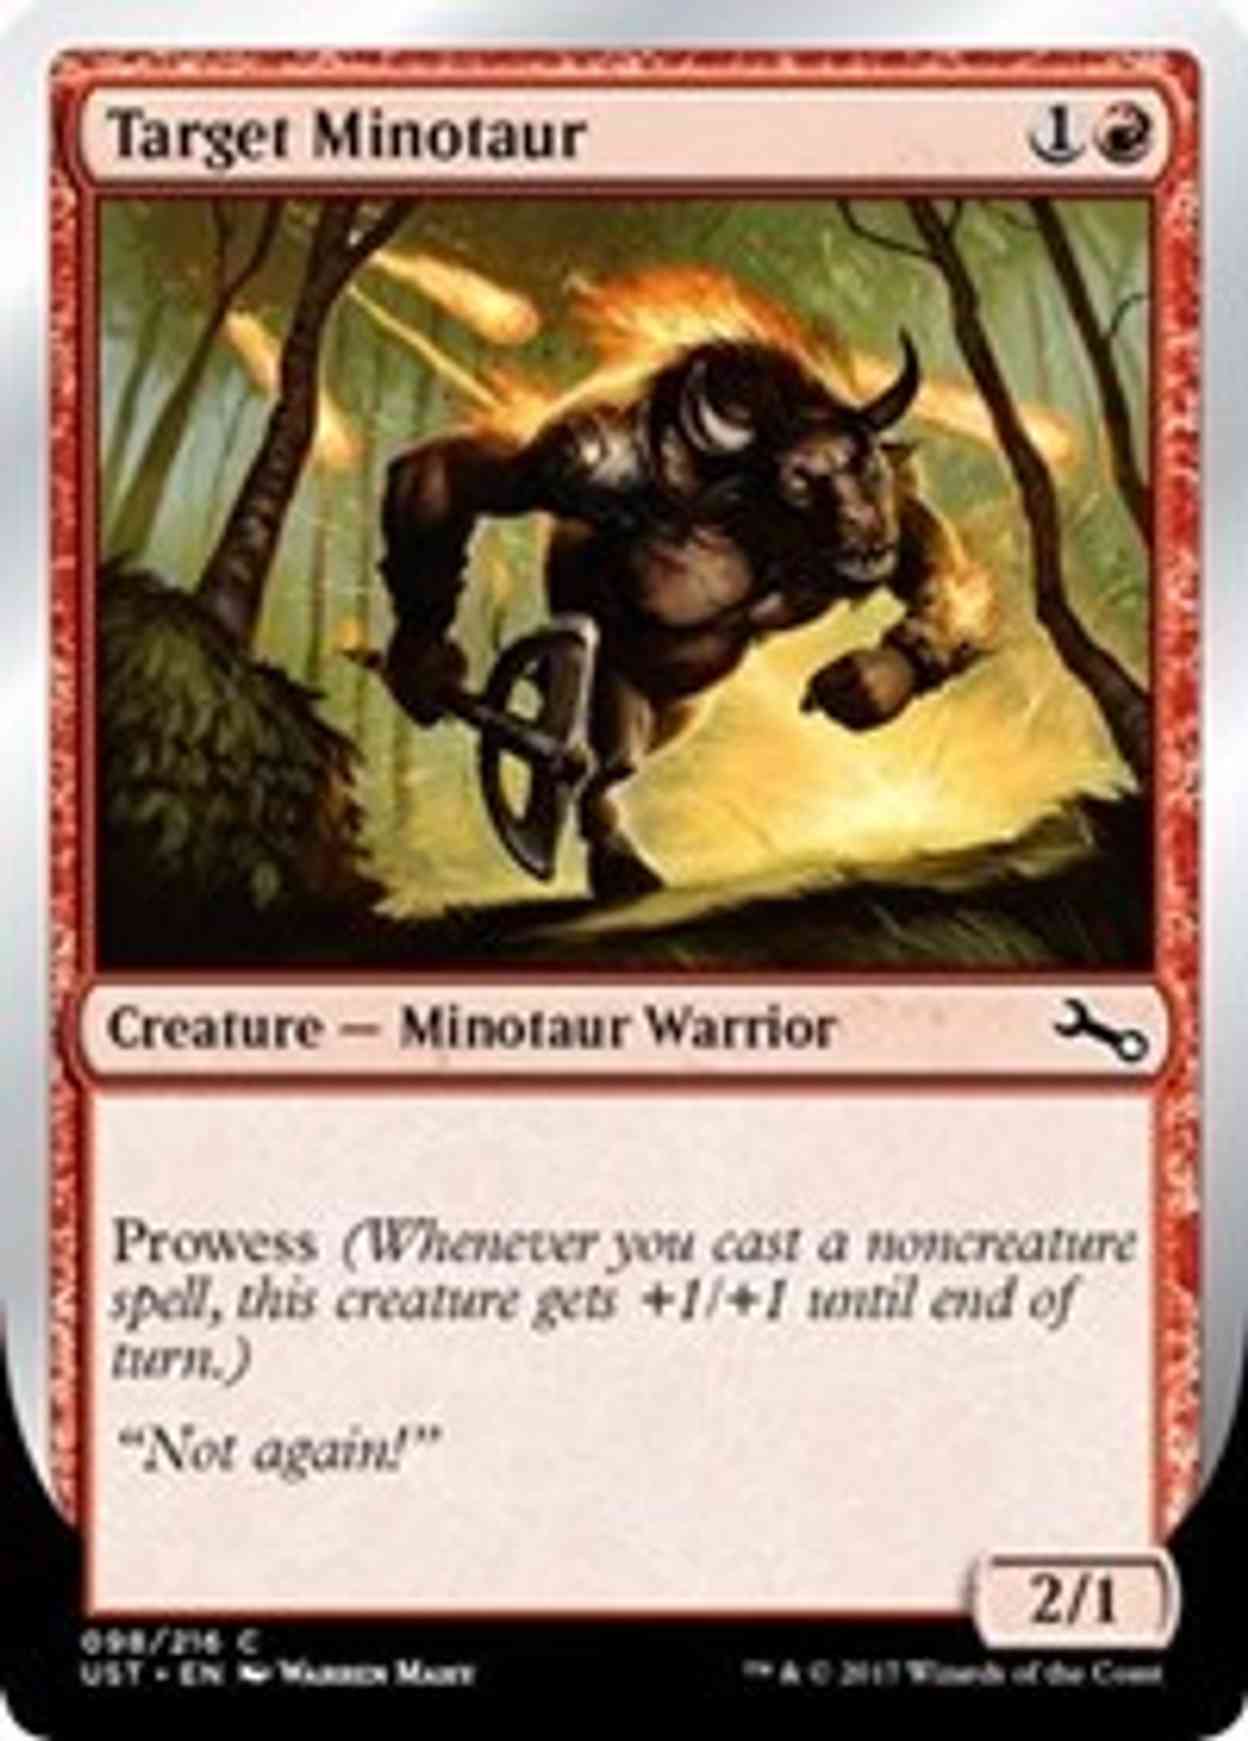 Target Minotaur (C) magic card front